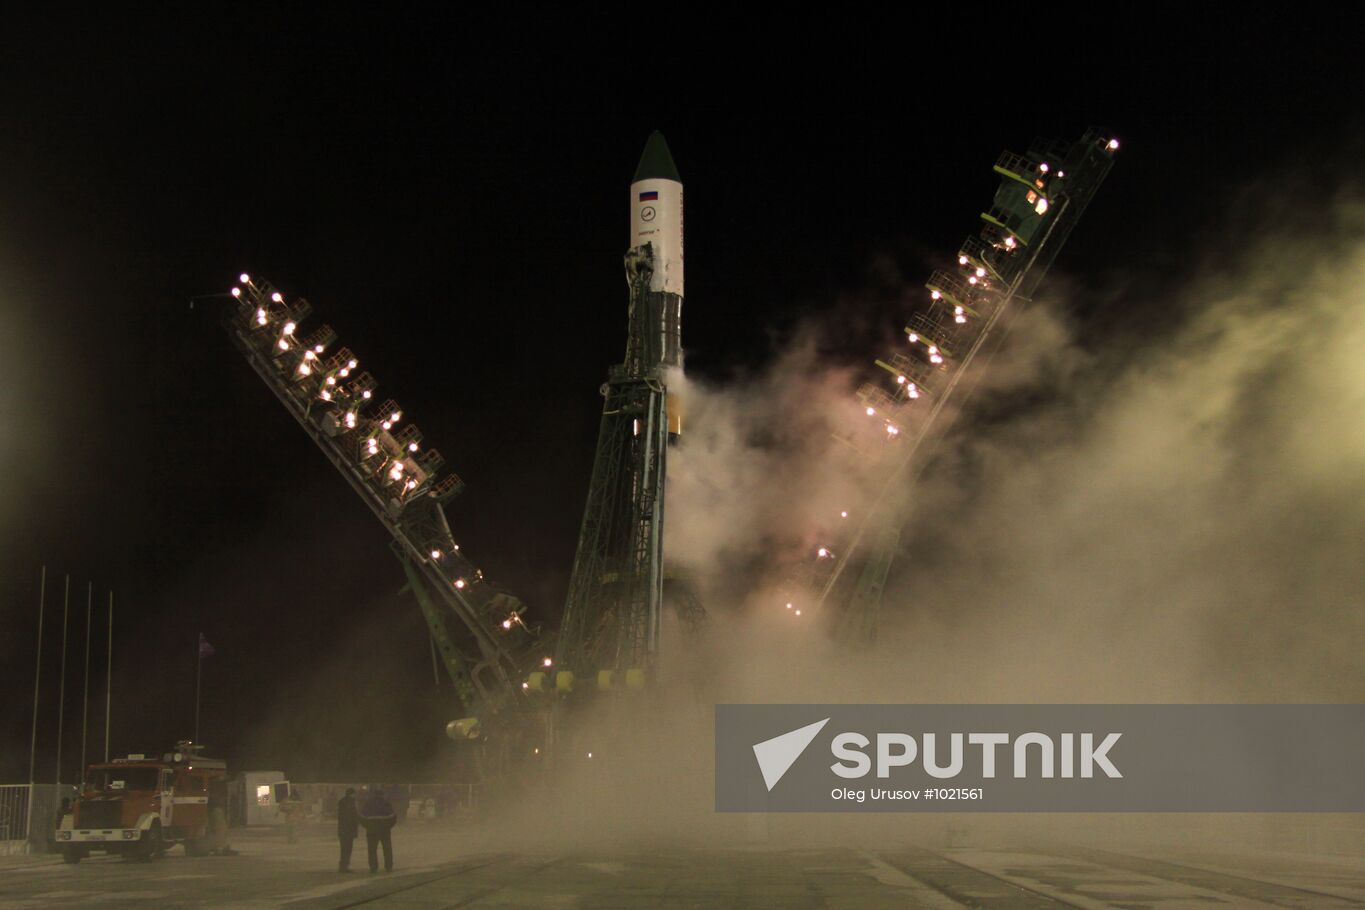 Launch of Soyuz-U missile and Progress M-14M cargo spaceship